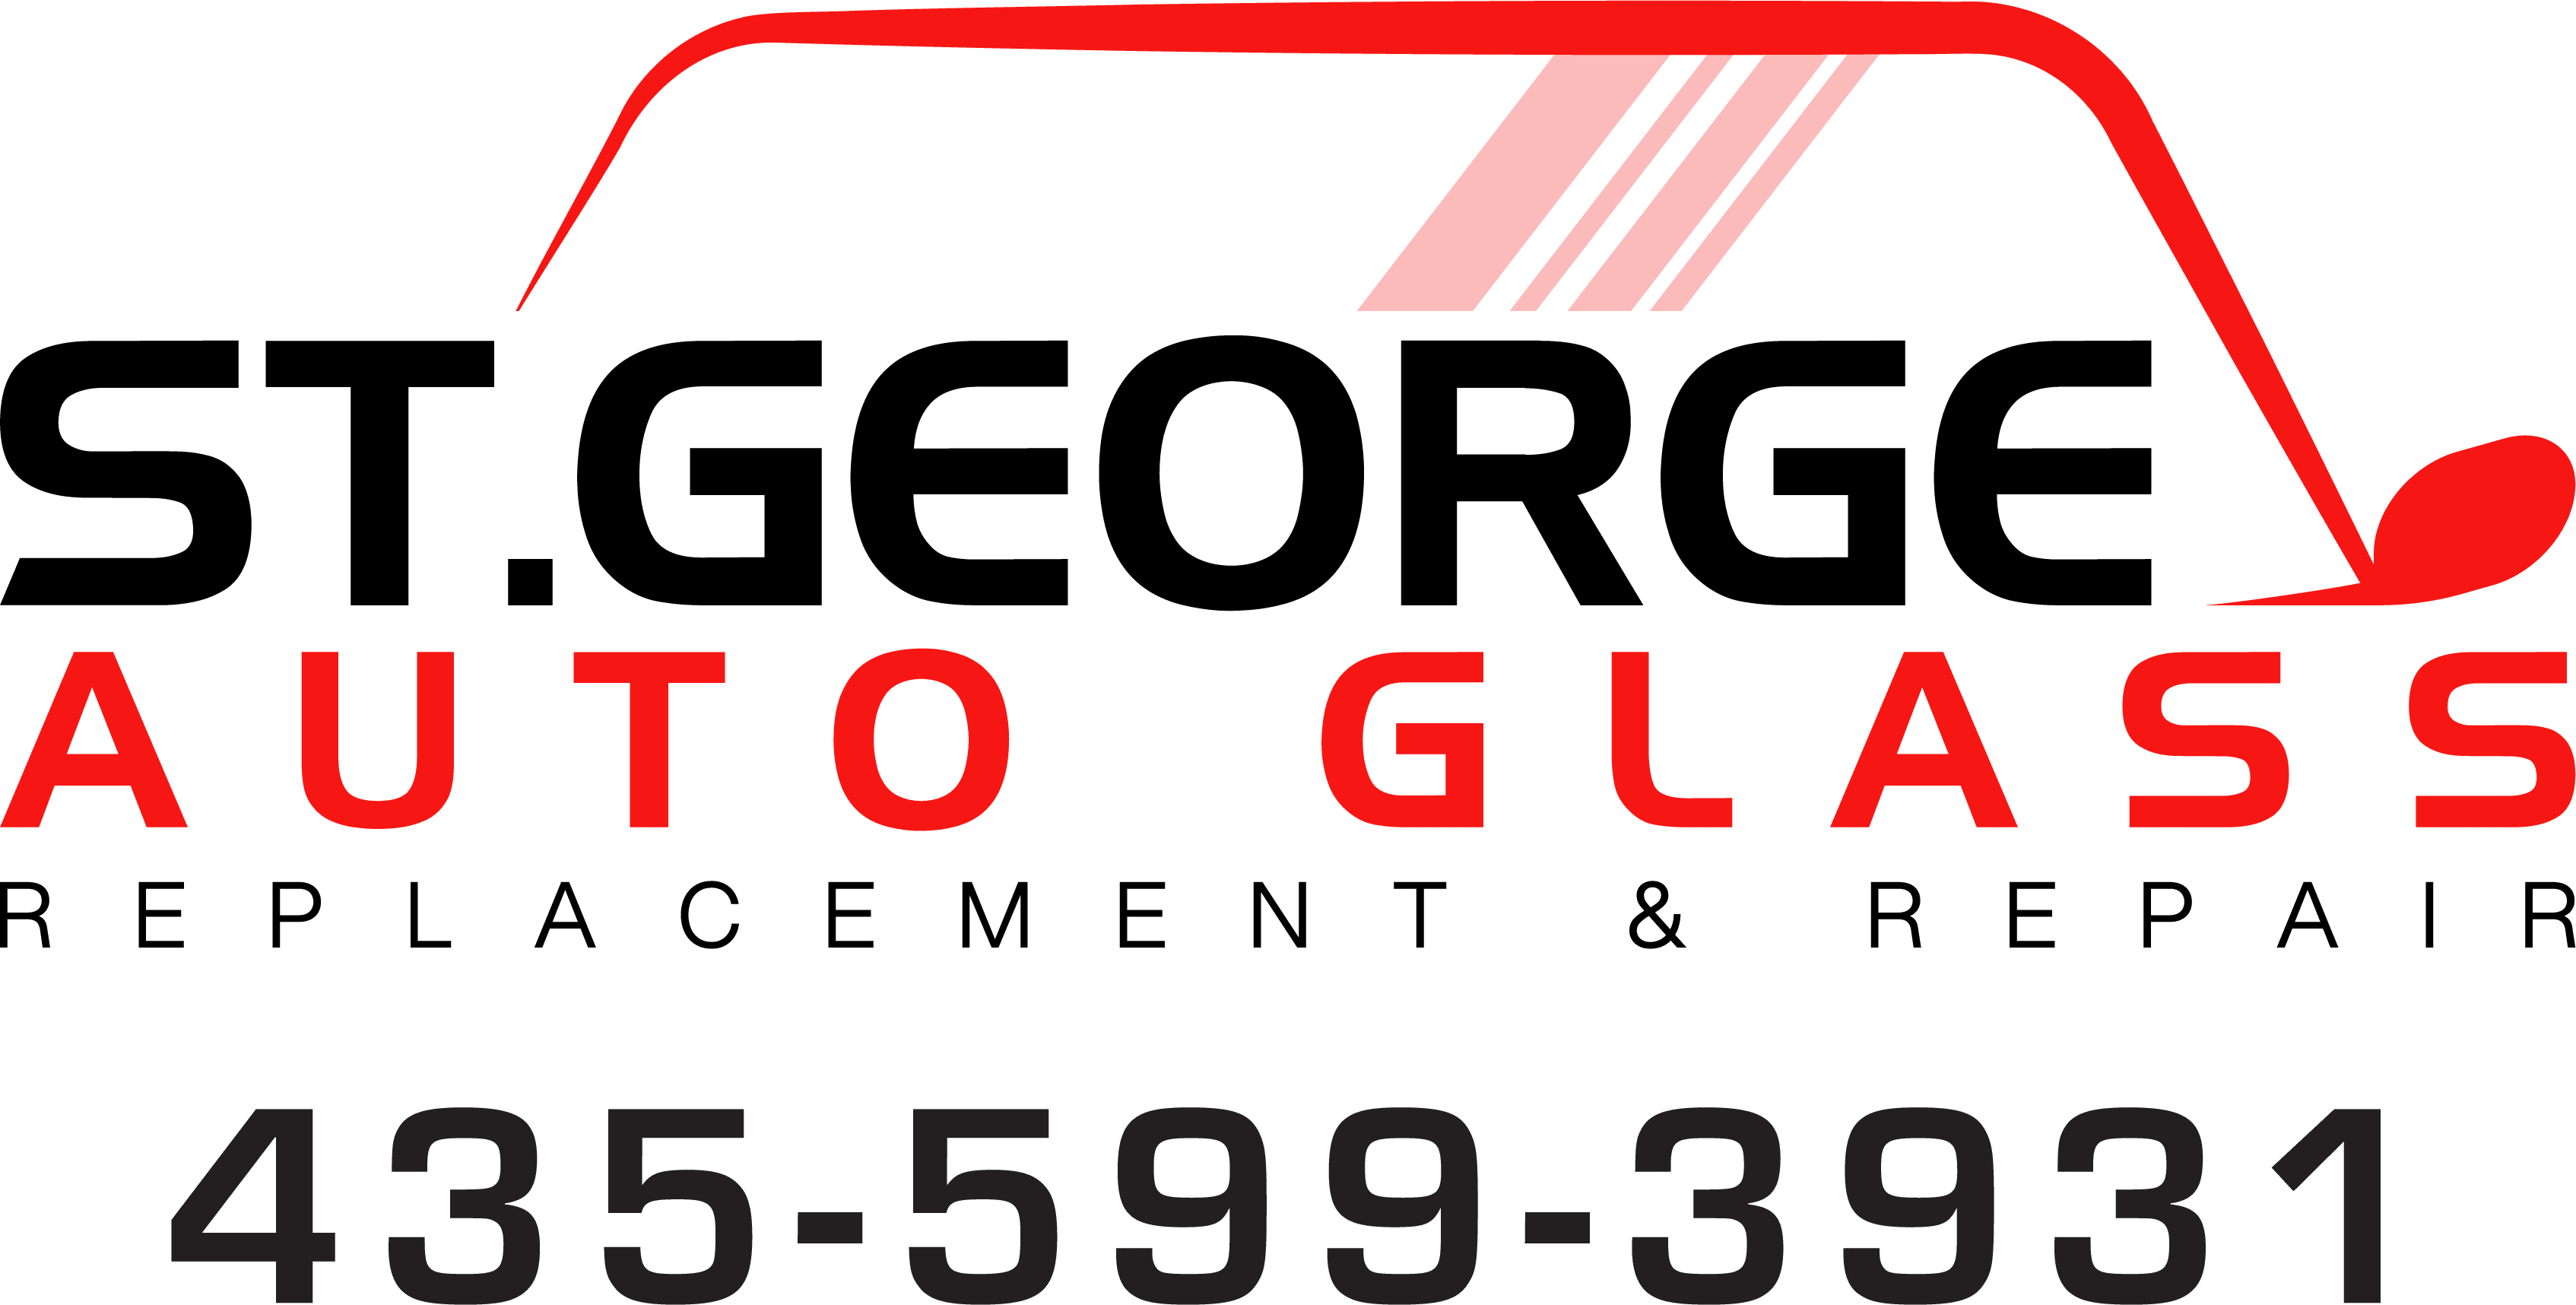 St. George Auto Glass